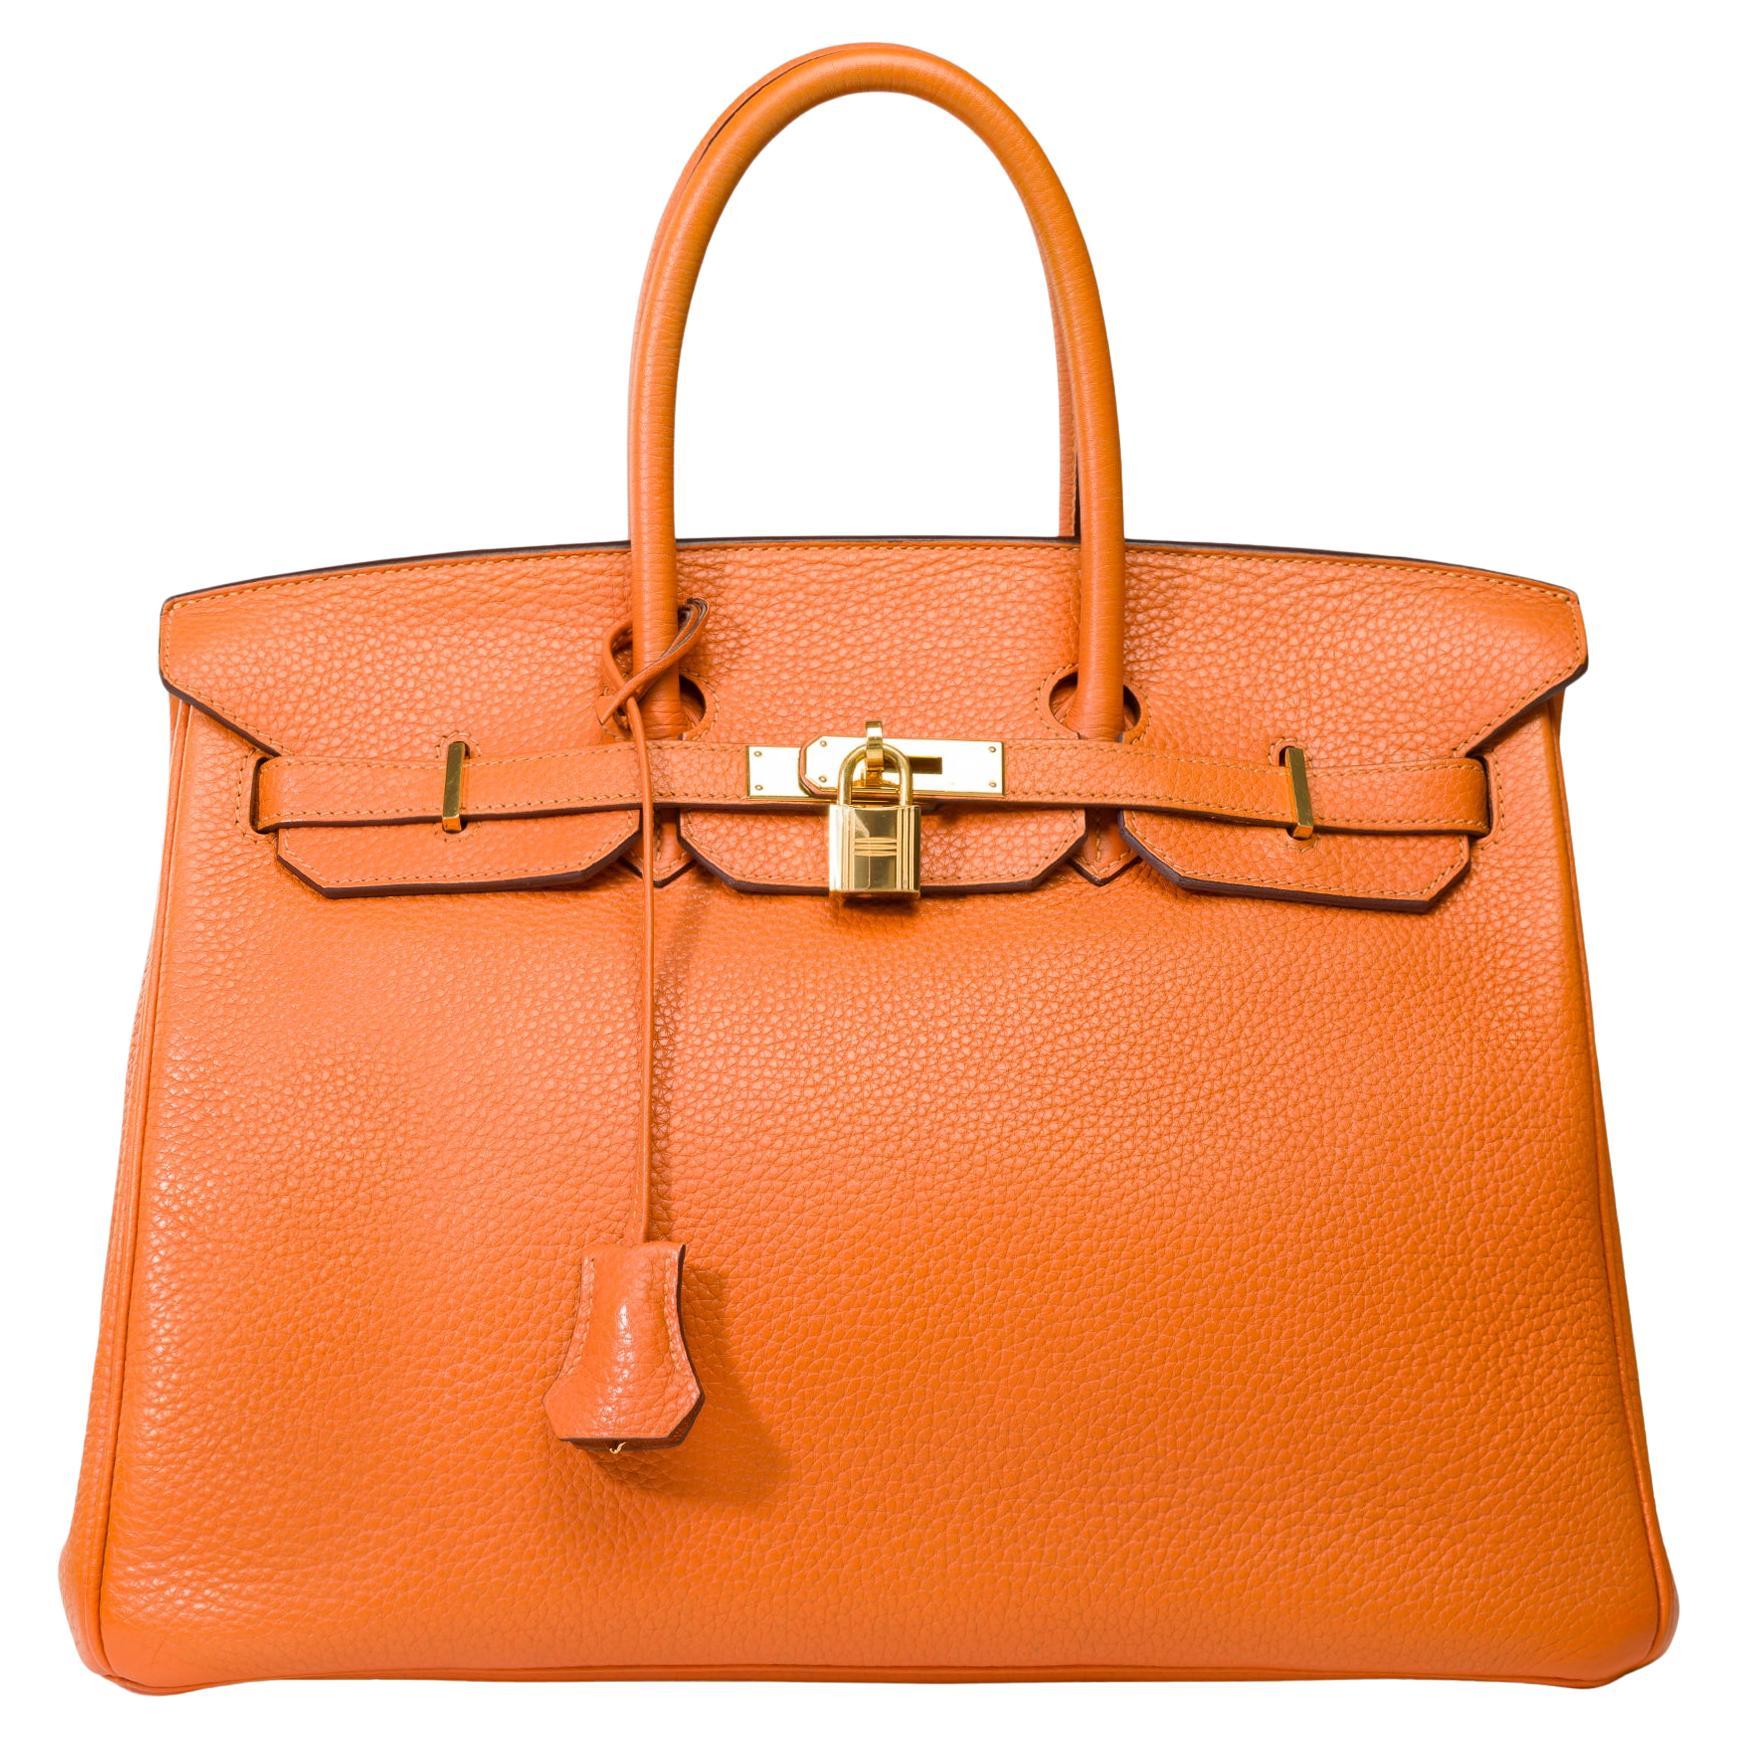 Amazing Hermès Birkin 35 handbag in Orange Togo Calf leather, GHW